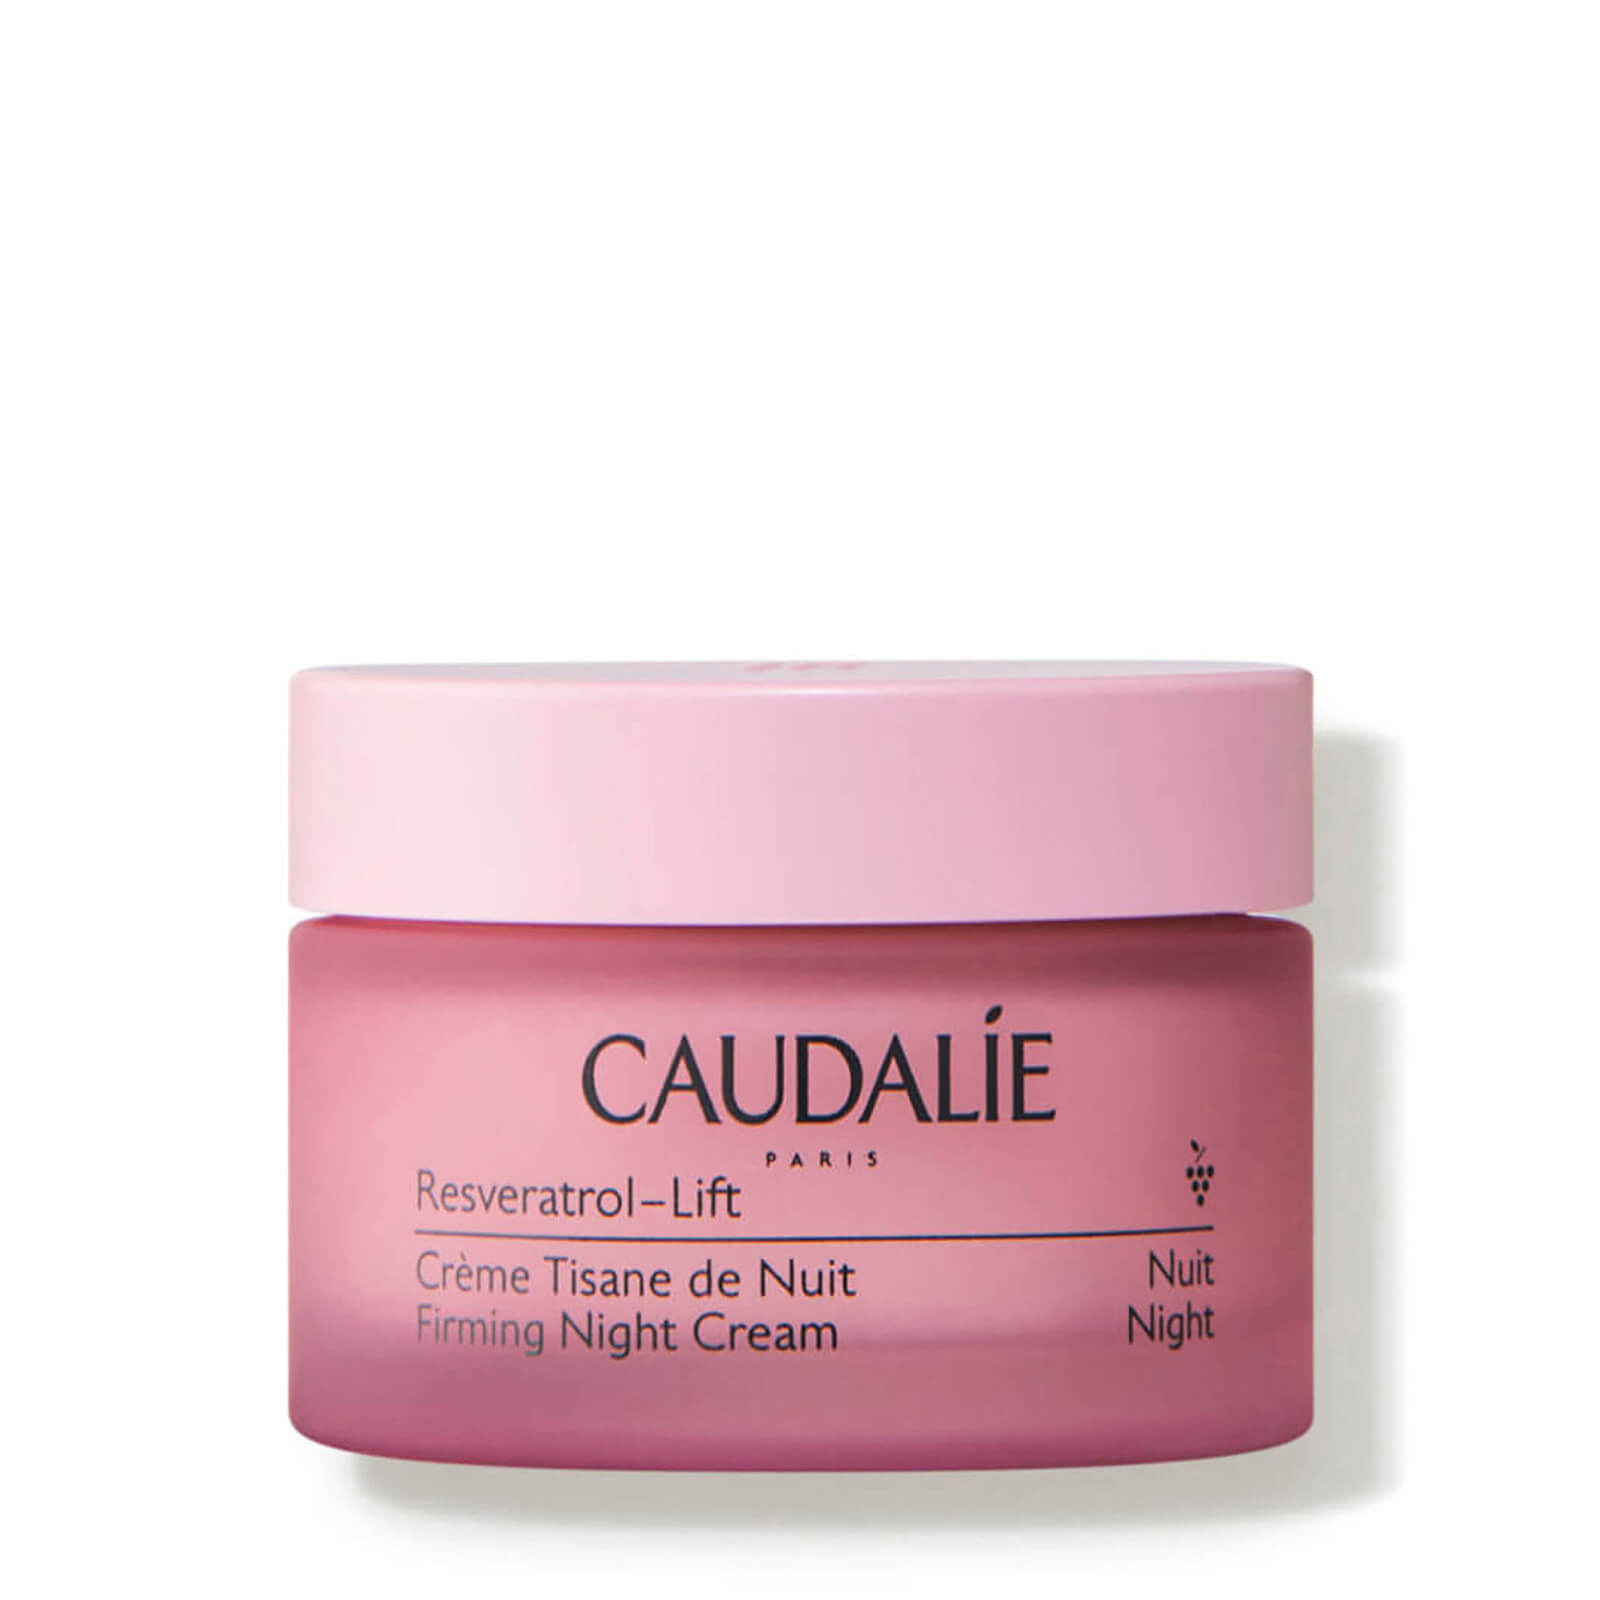 Caudalie Resveratrol-Lift Firming Night Cream 1.6 Oz